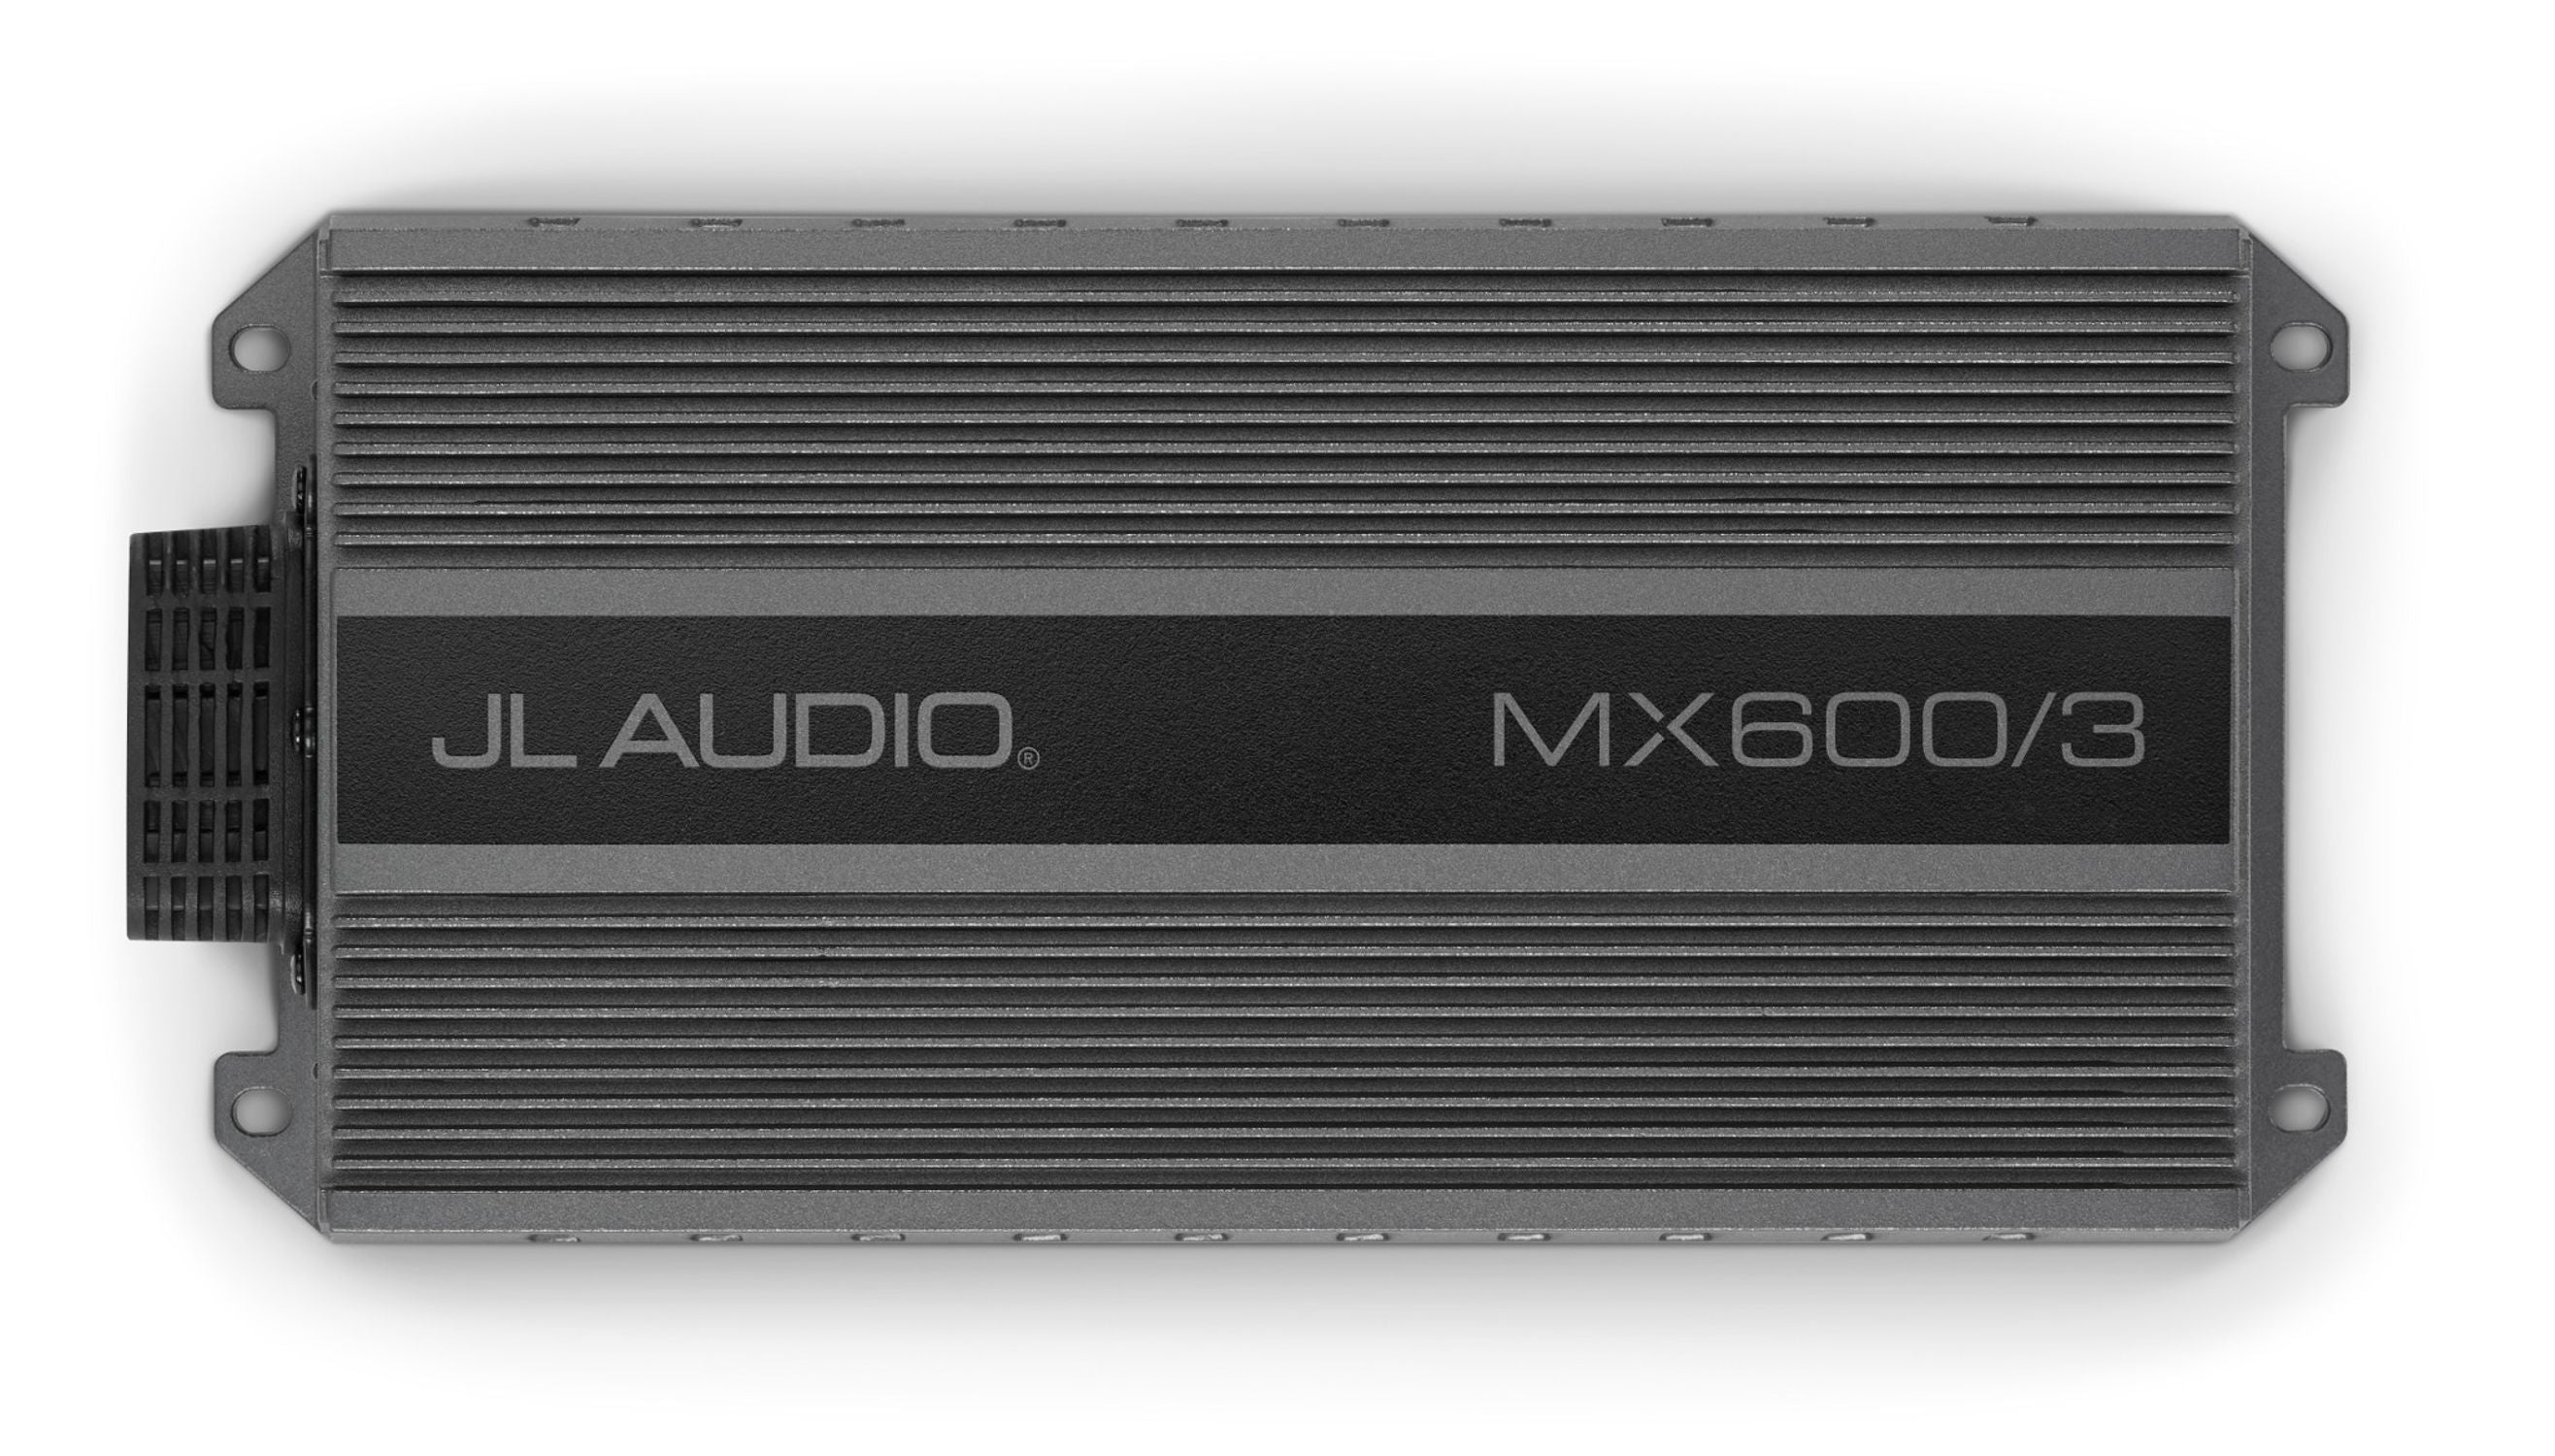 Front Overhead of MX600/3 Amplifier